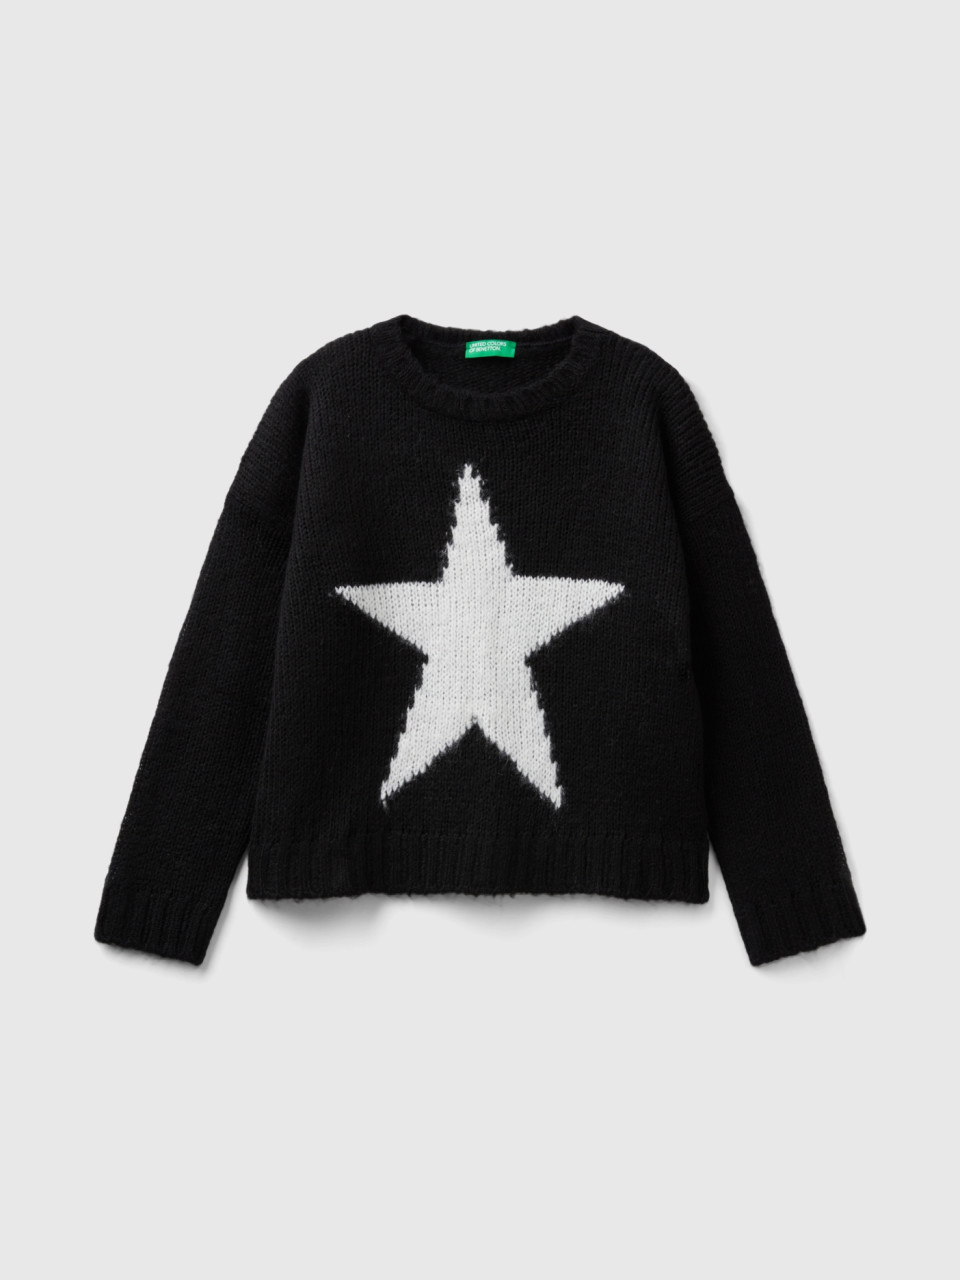 Benetton, Sweater With Star Inlay, Black, Kids